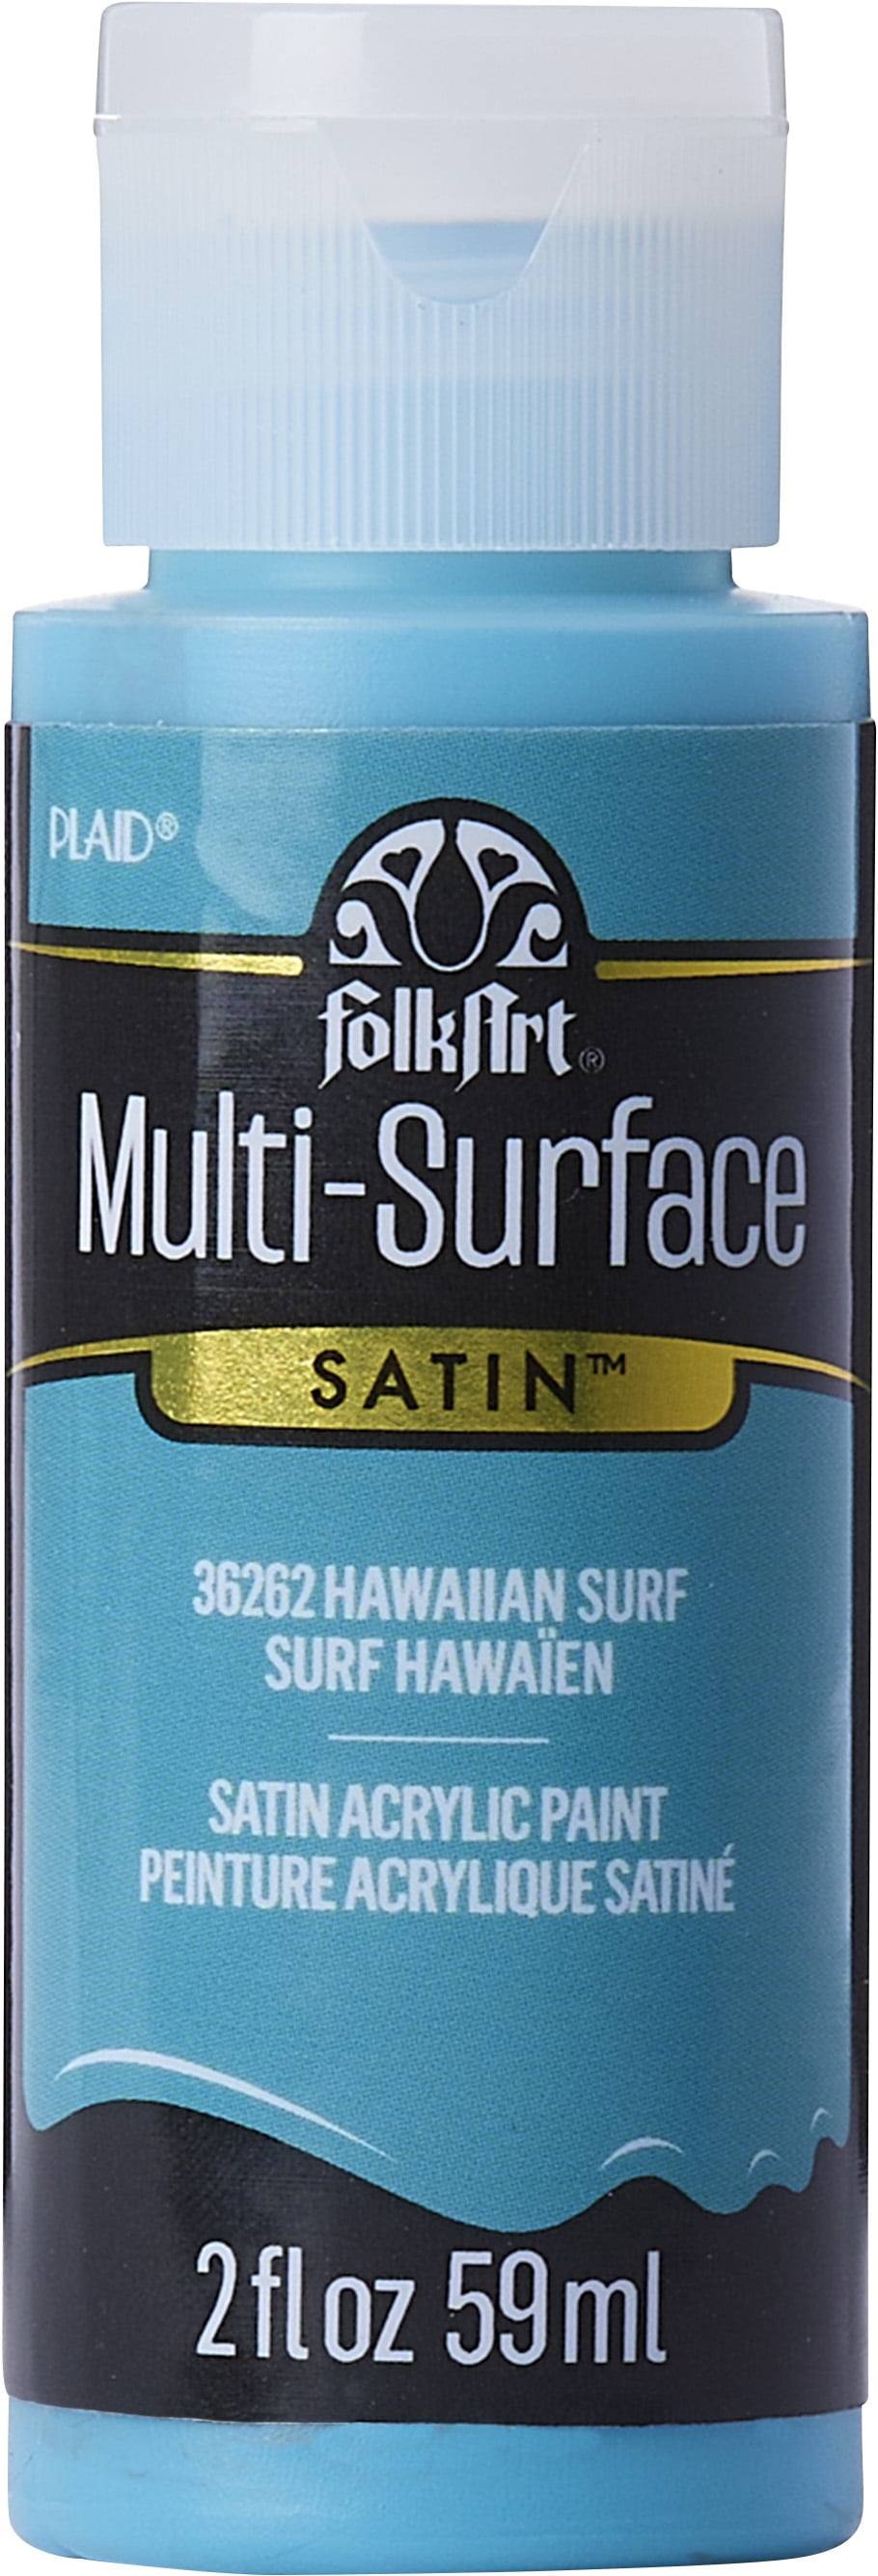 FolkArt Multi-Surface Acrylic Craft Paint, Satin Finish, Hawaiian Surf, 2  fl oz